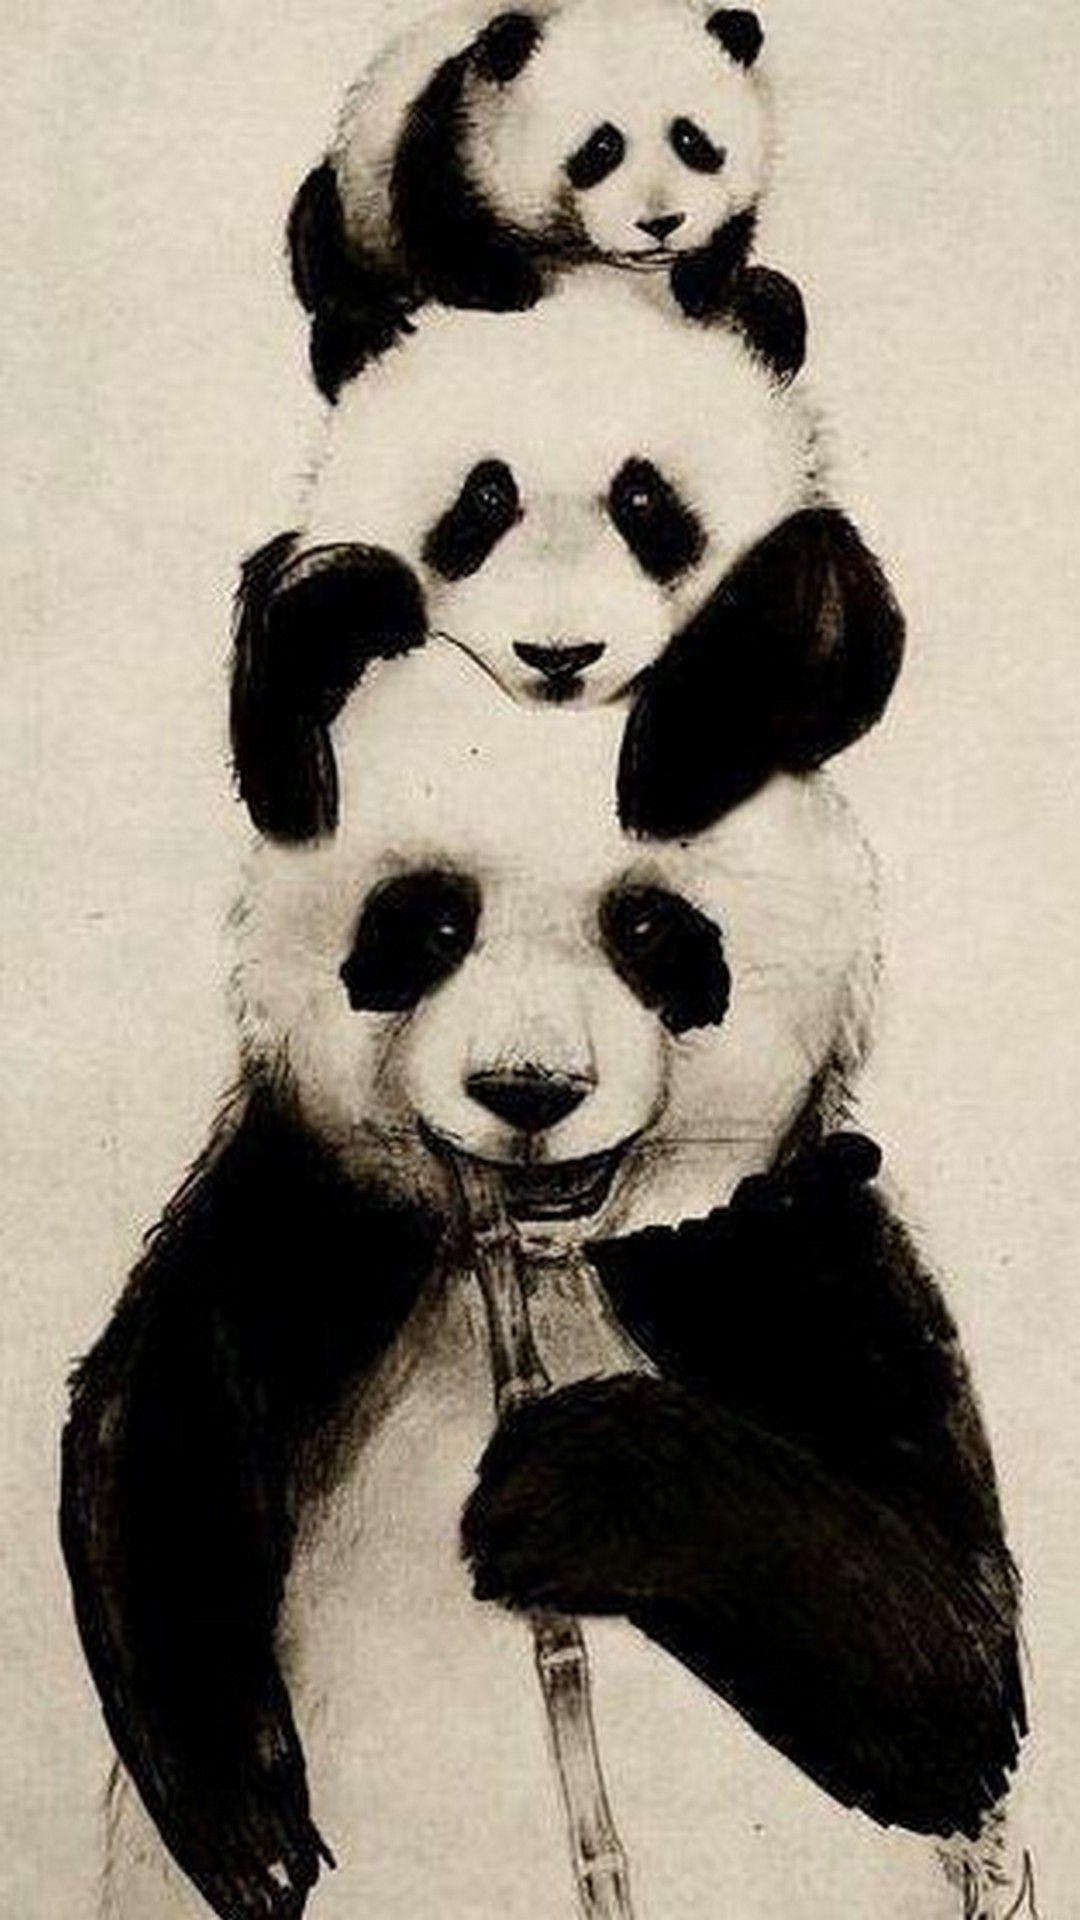 Cute Panda Wallpaper Android. Best HD Wallpaper. Cute panda wallpaper, Panda art, Panda wallpaper iphone